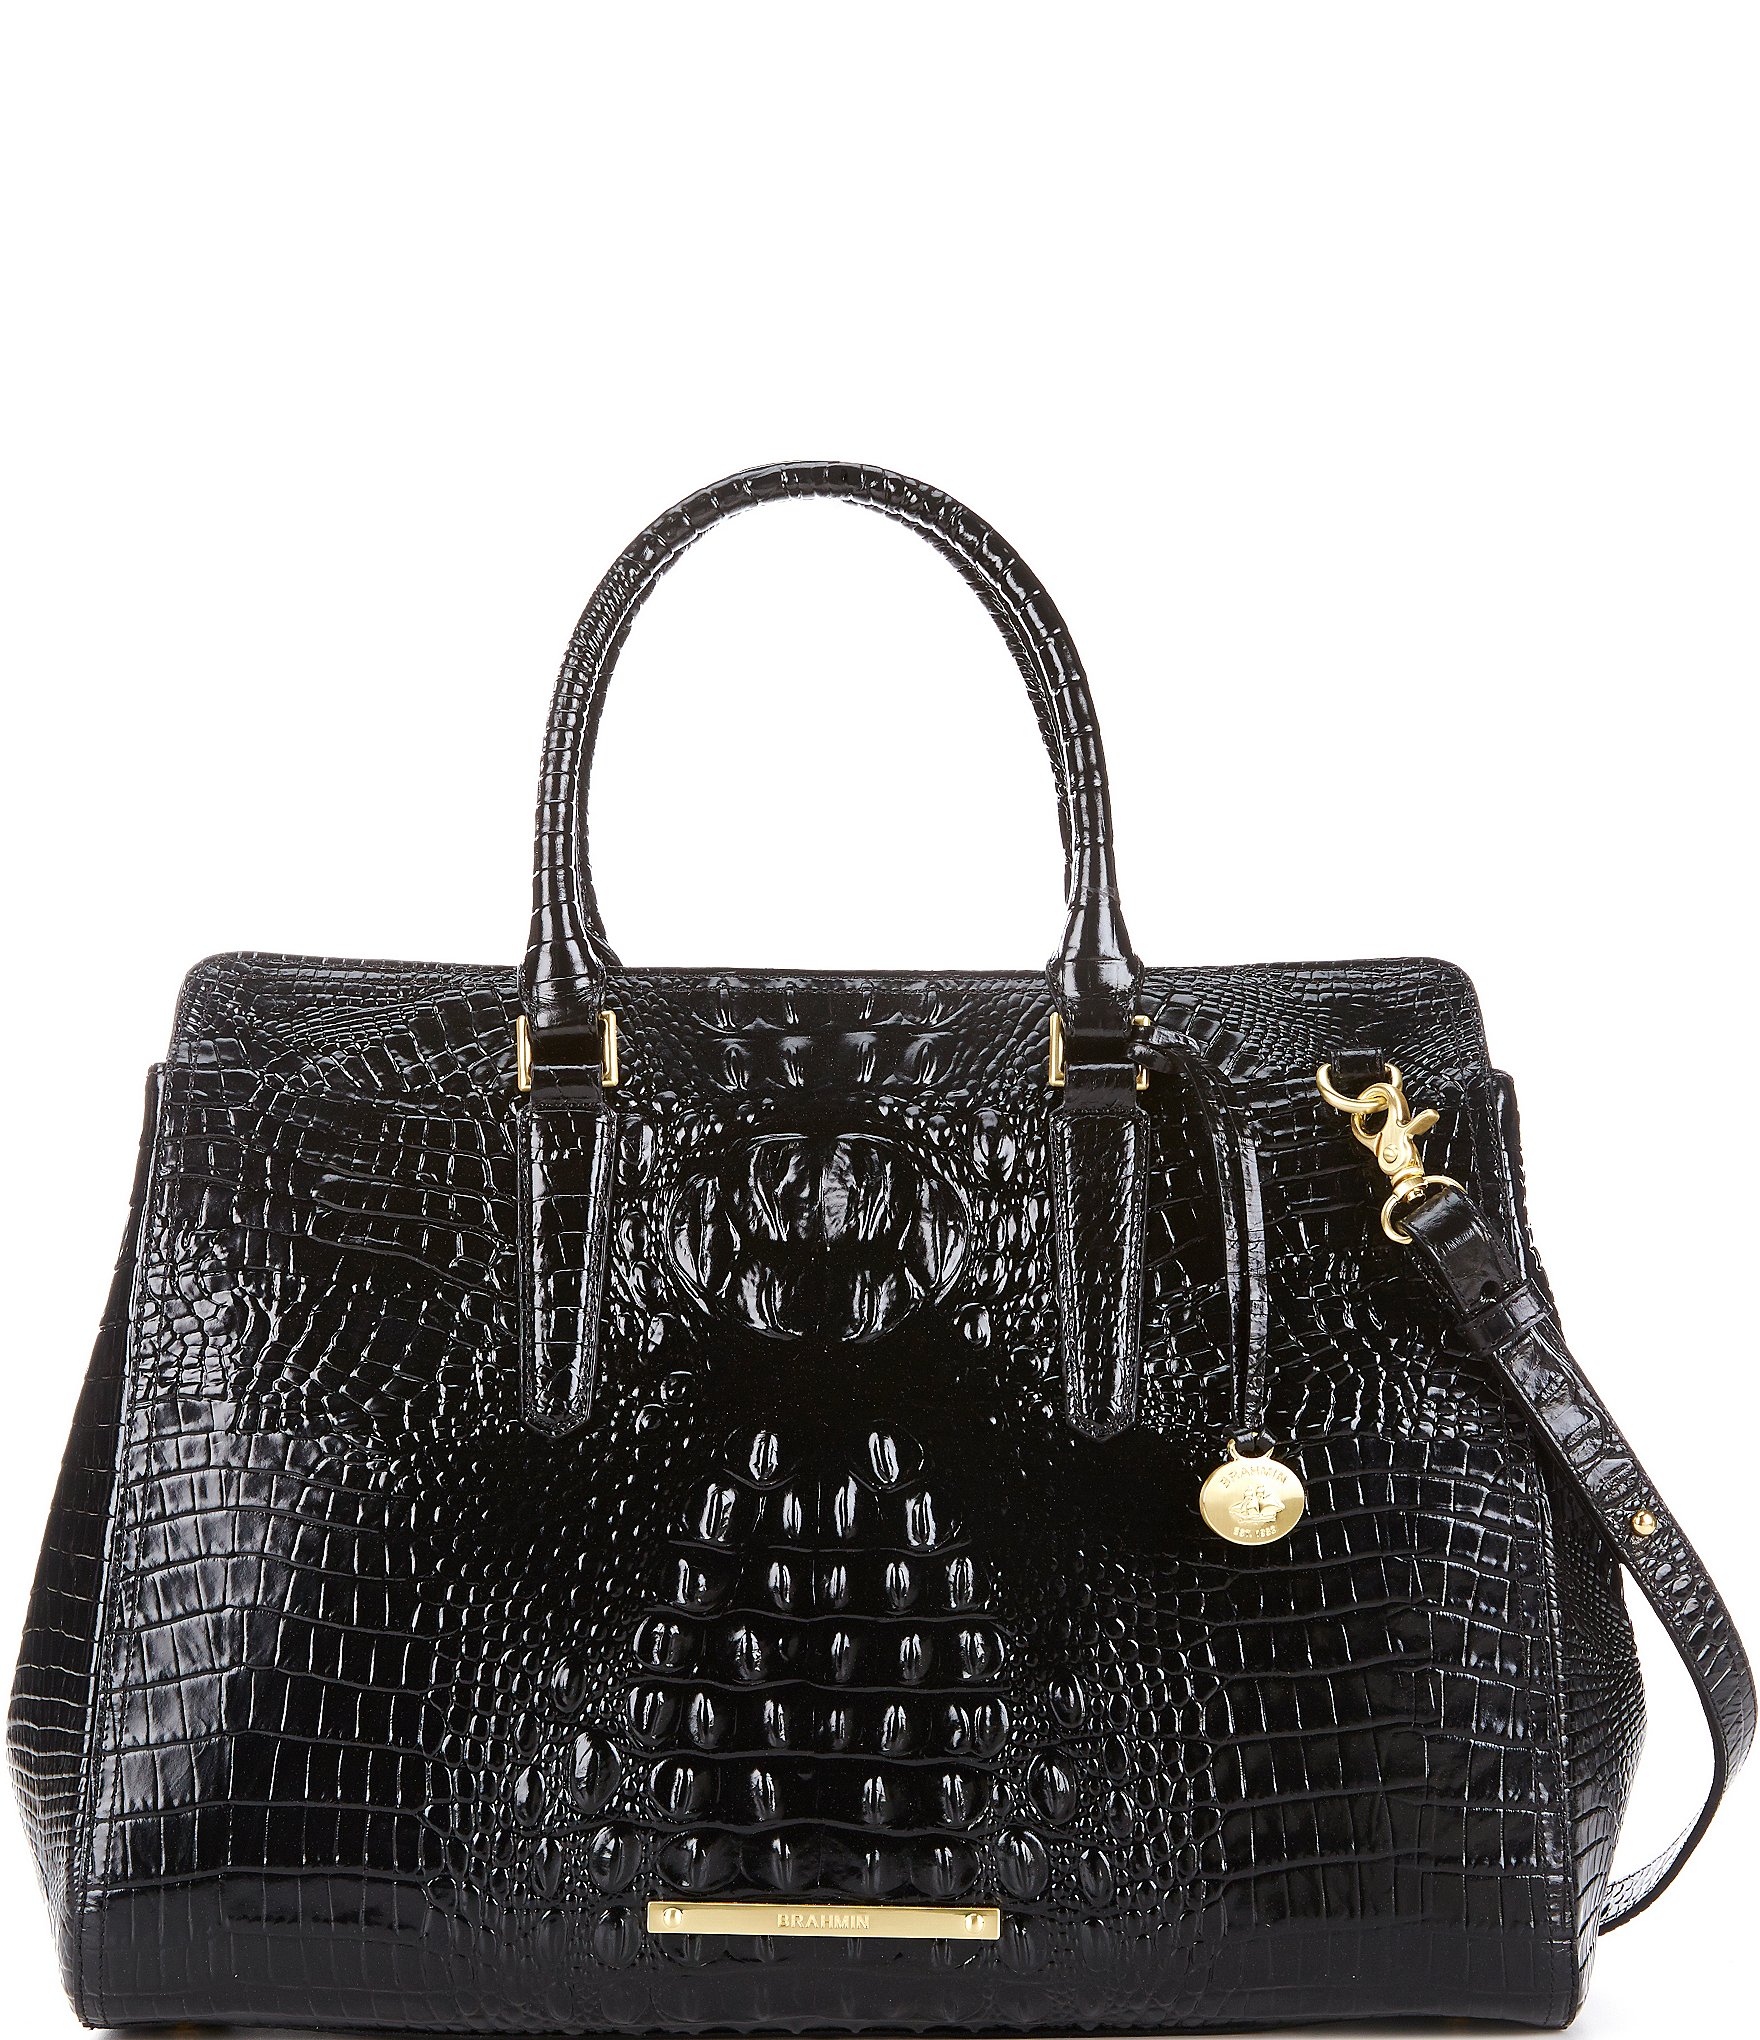 A BRAHMIN handbag- It's what she wants for Mother's Day! . . . . #dillards # brahmin #brahminbag #brahminhandbag #handbag #handbags #purse…